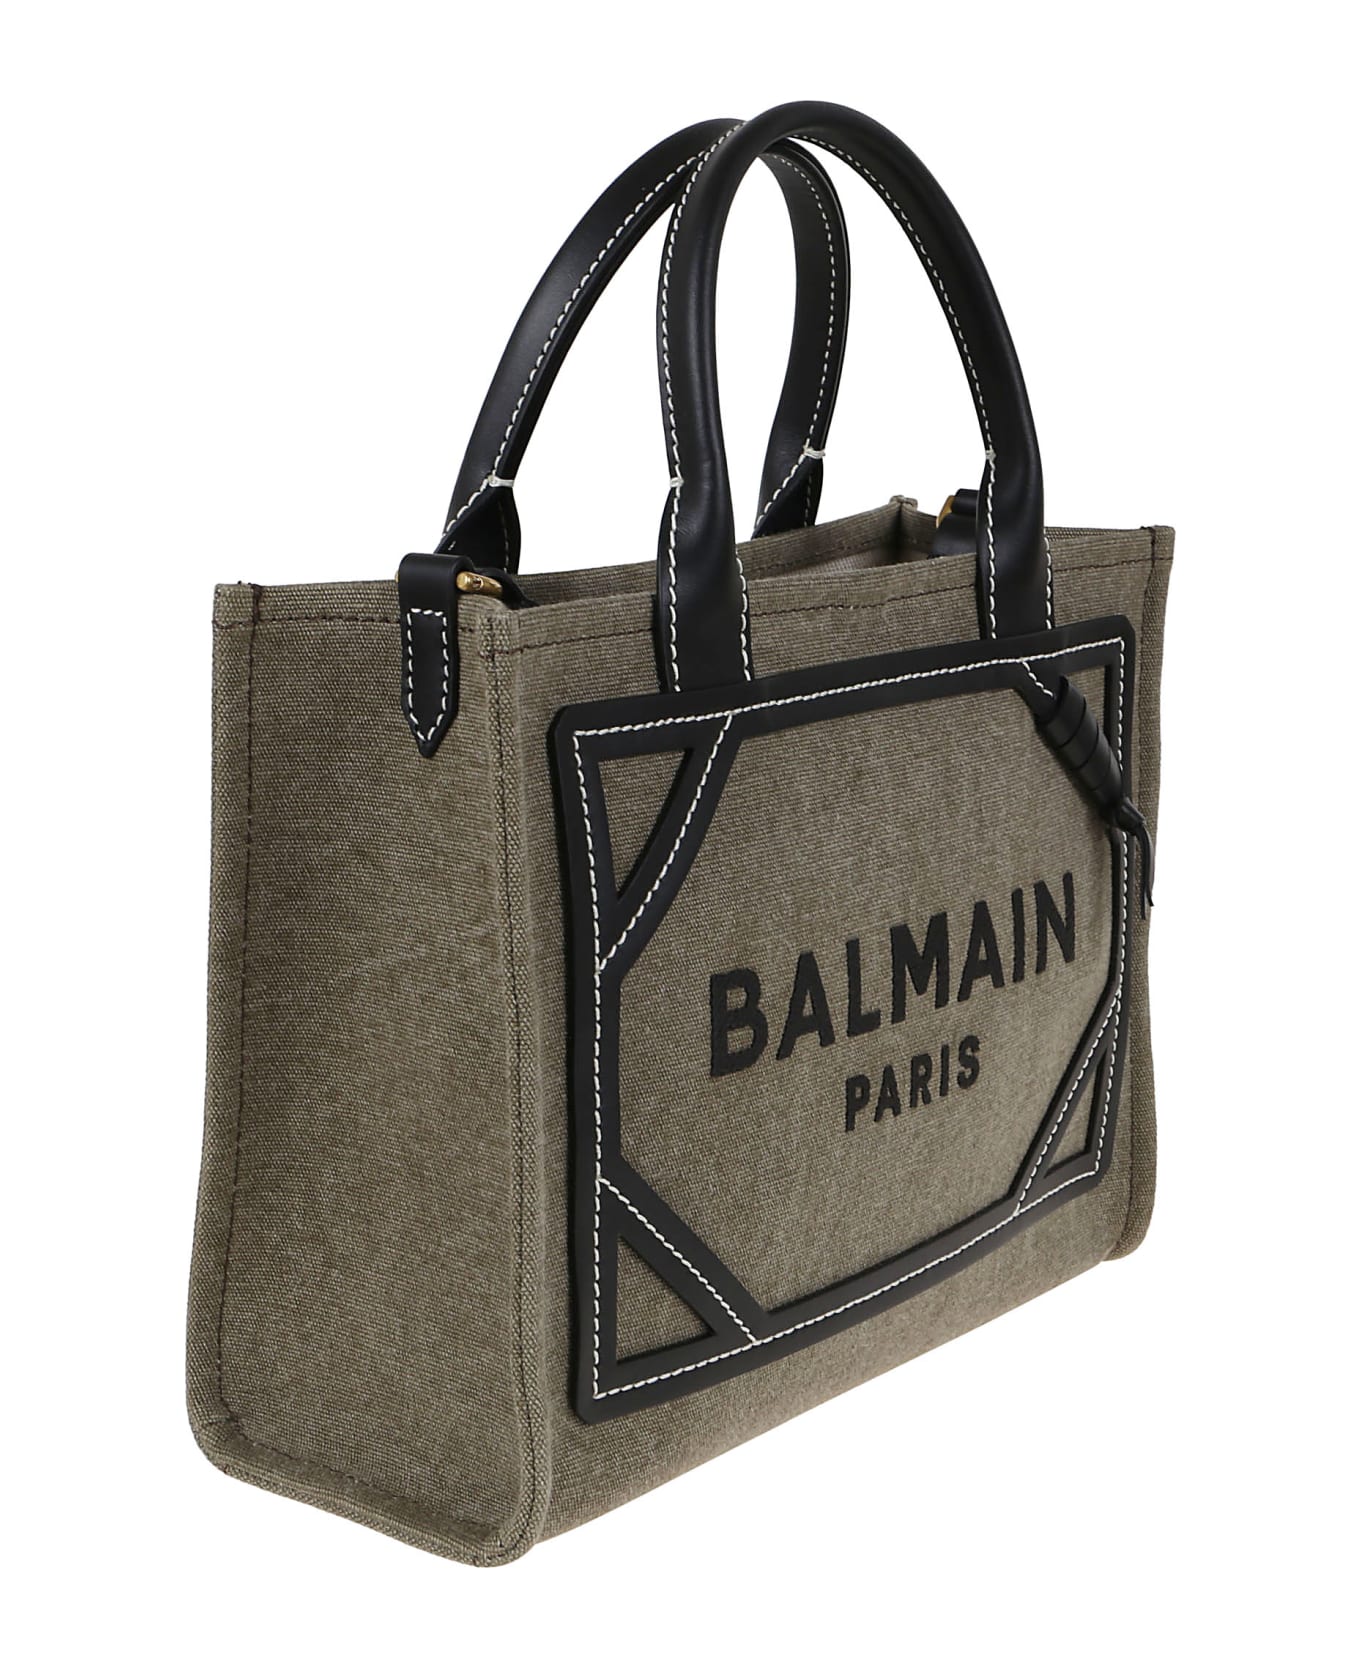 Balmain B-army Shopper Bag - kaki/noir